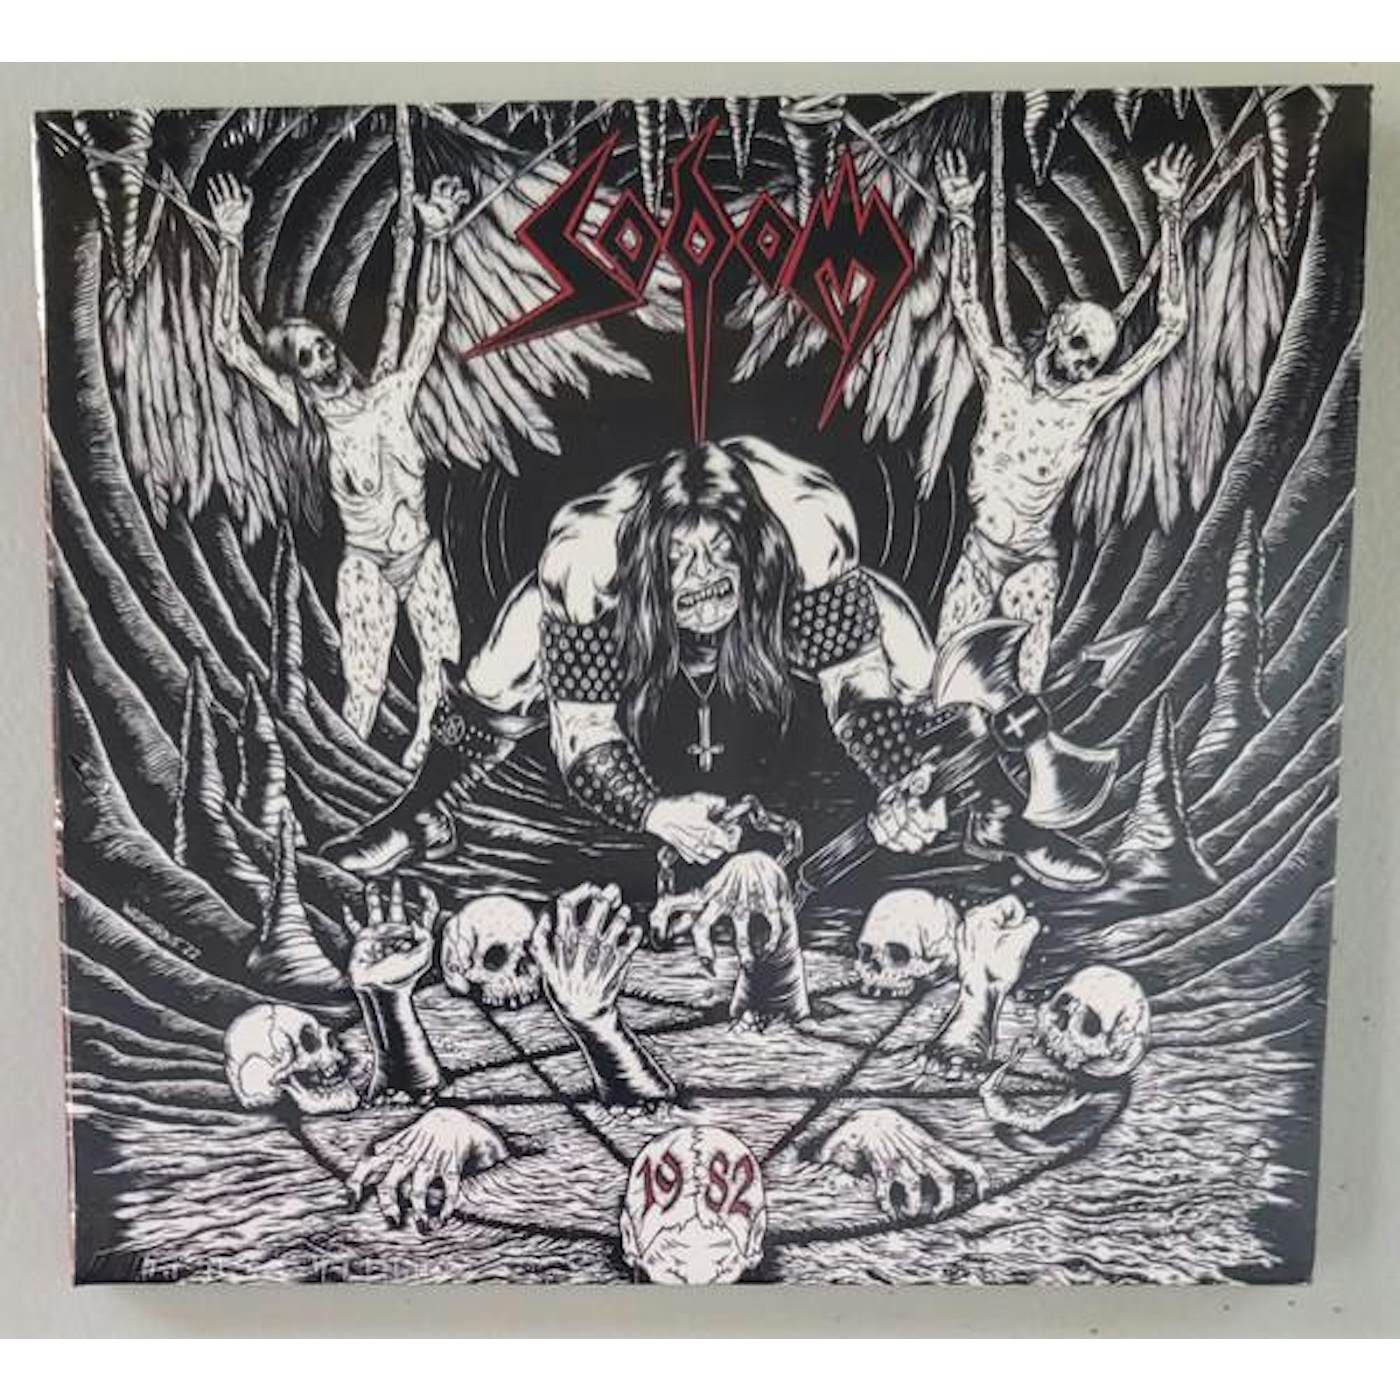 Sodom 1982 CD